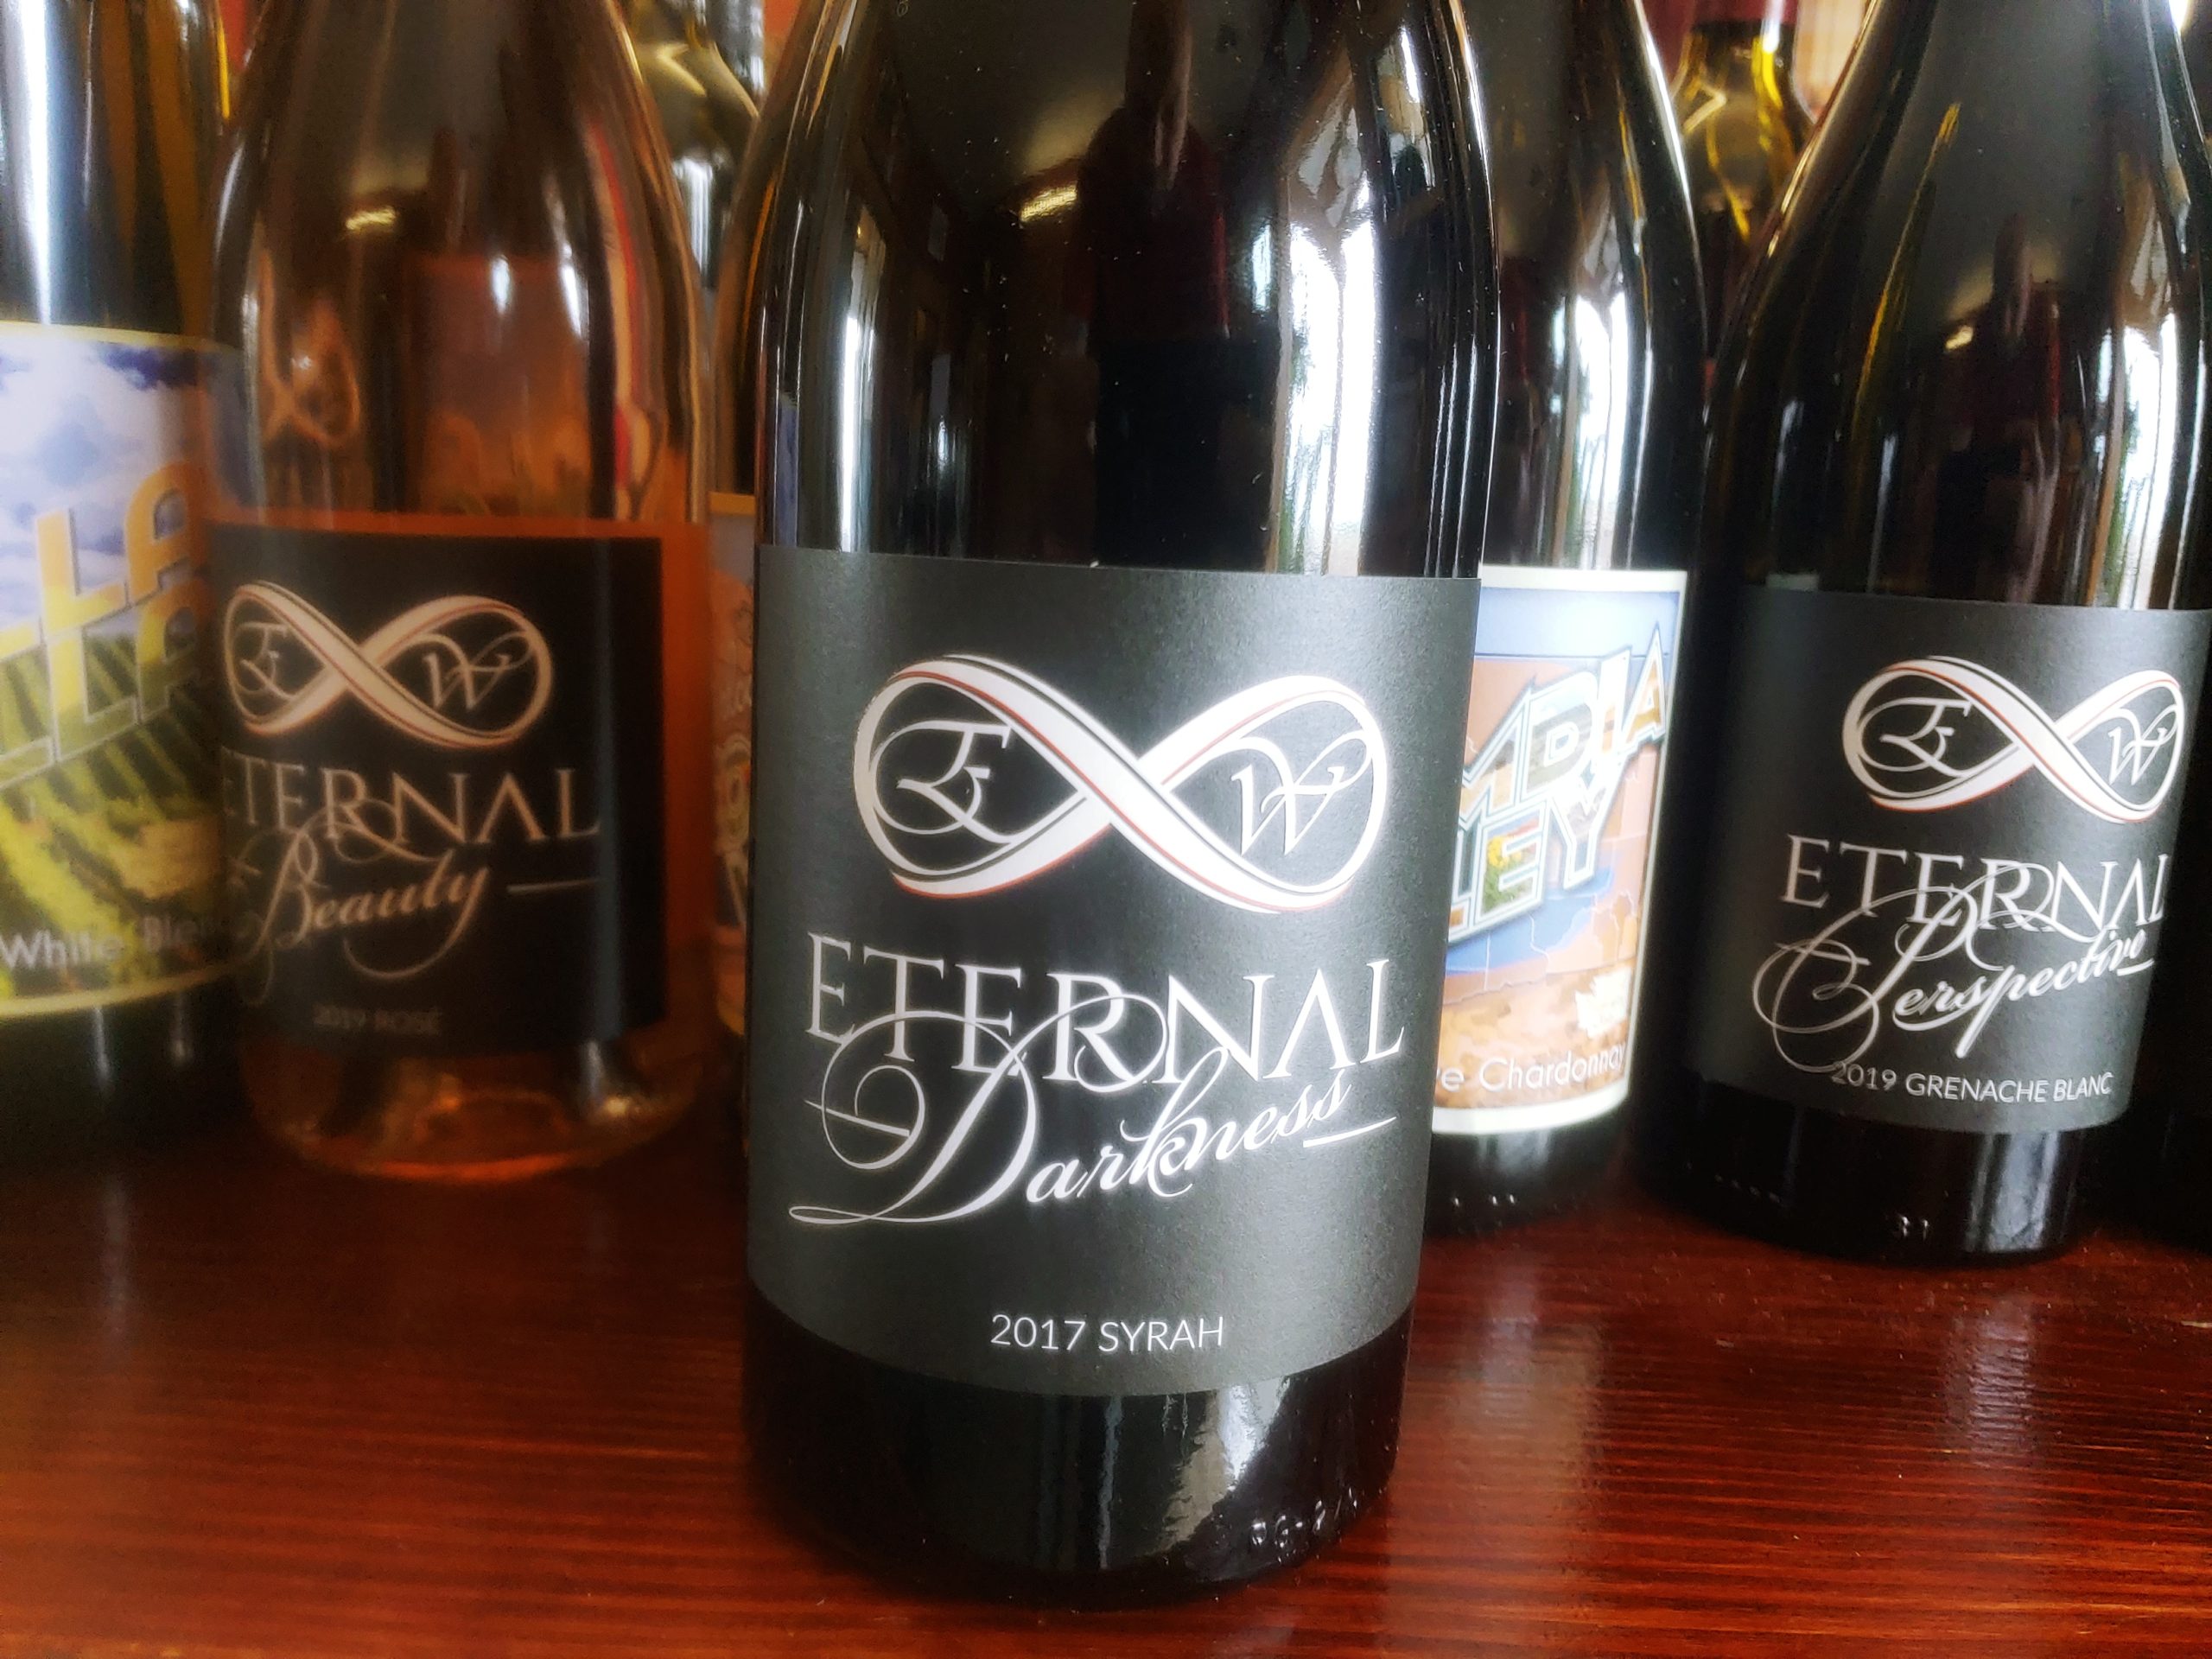 New 90 point scoring wines from Eternal Wines in Walla Walla!